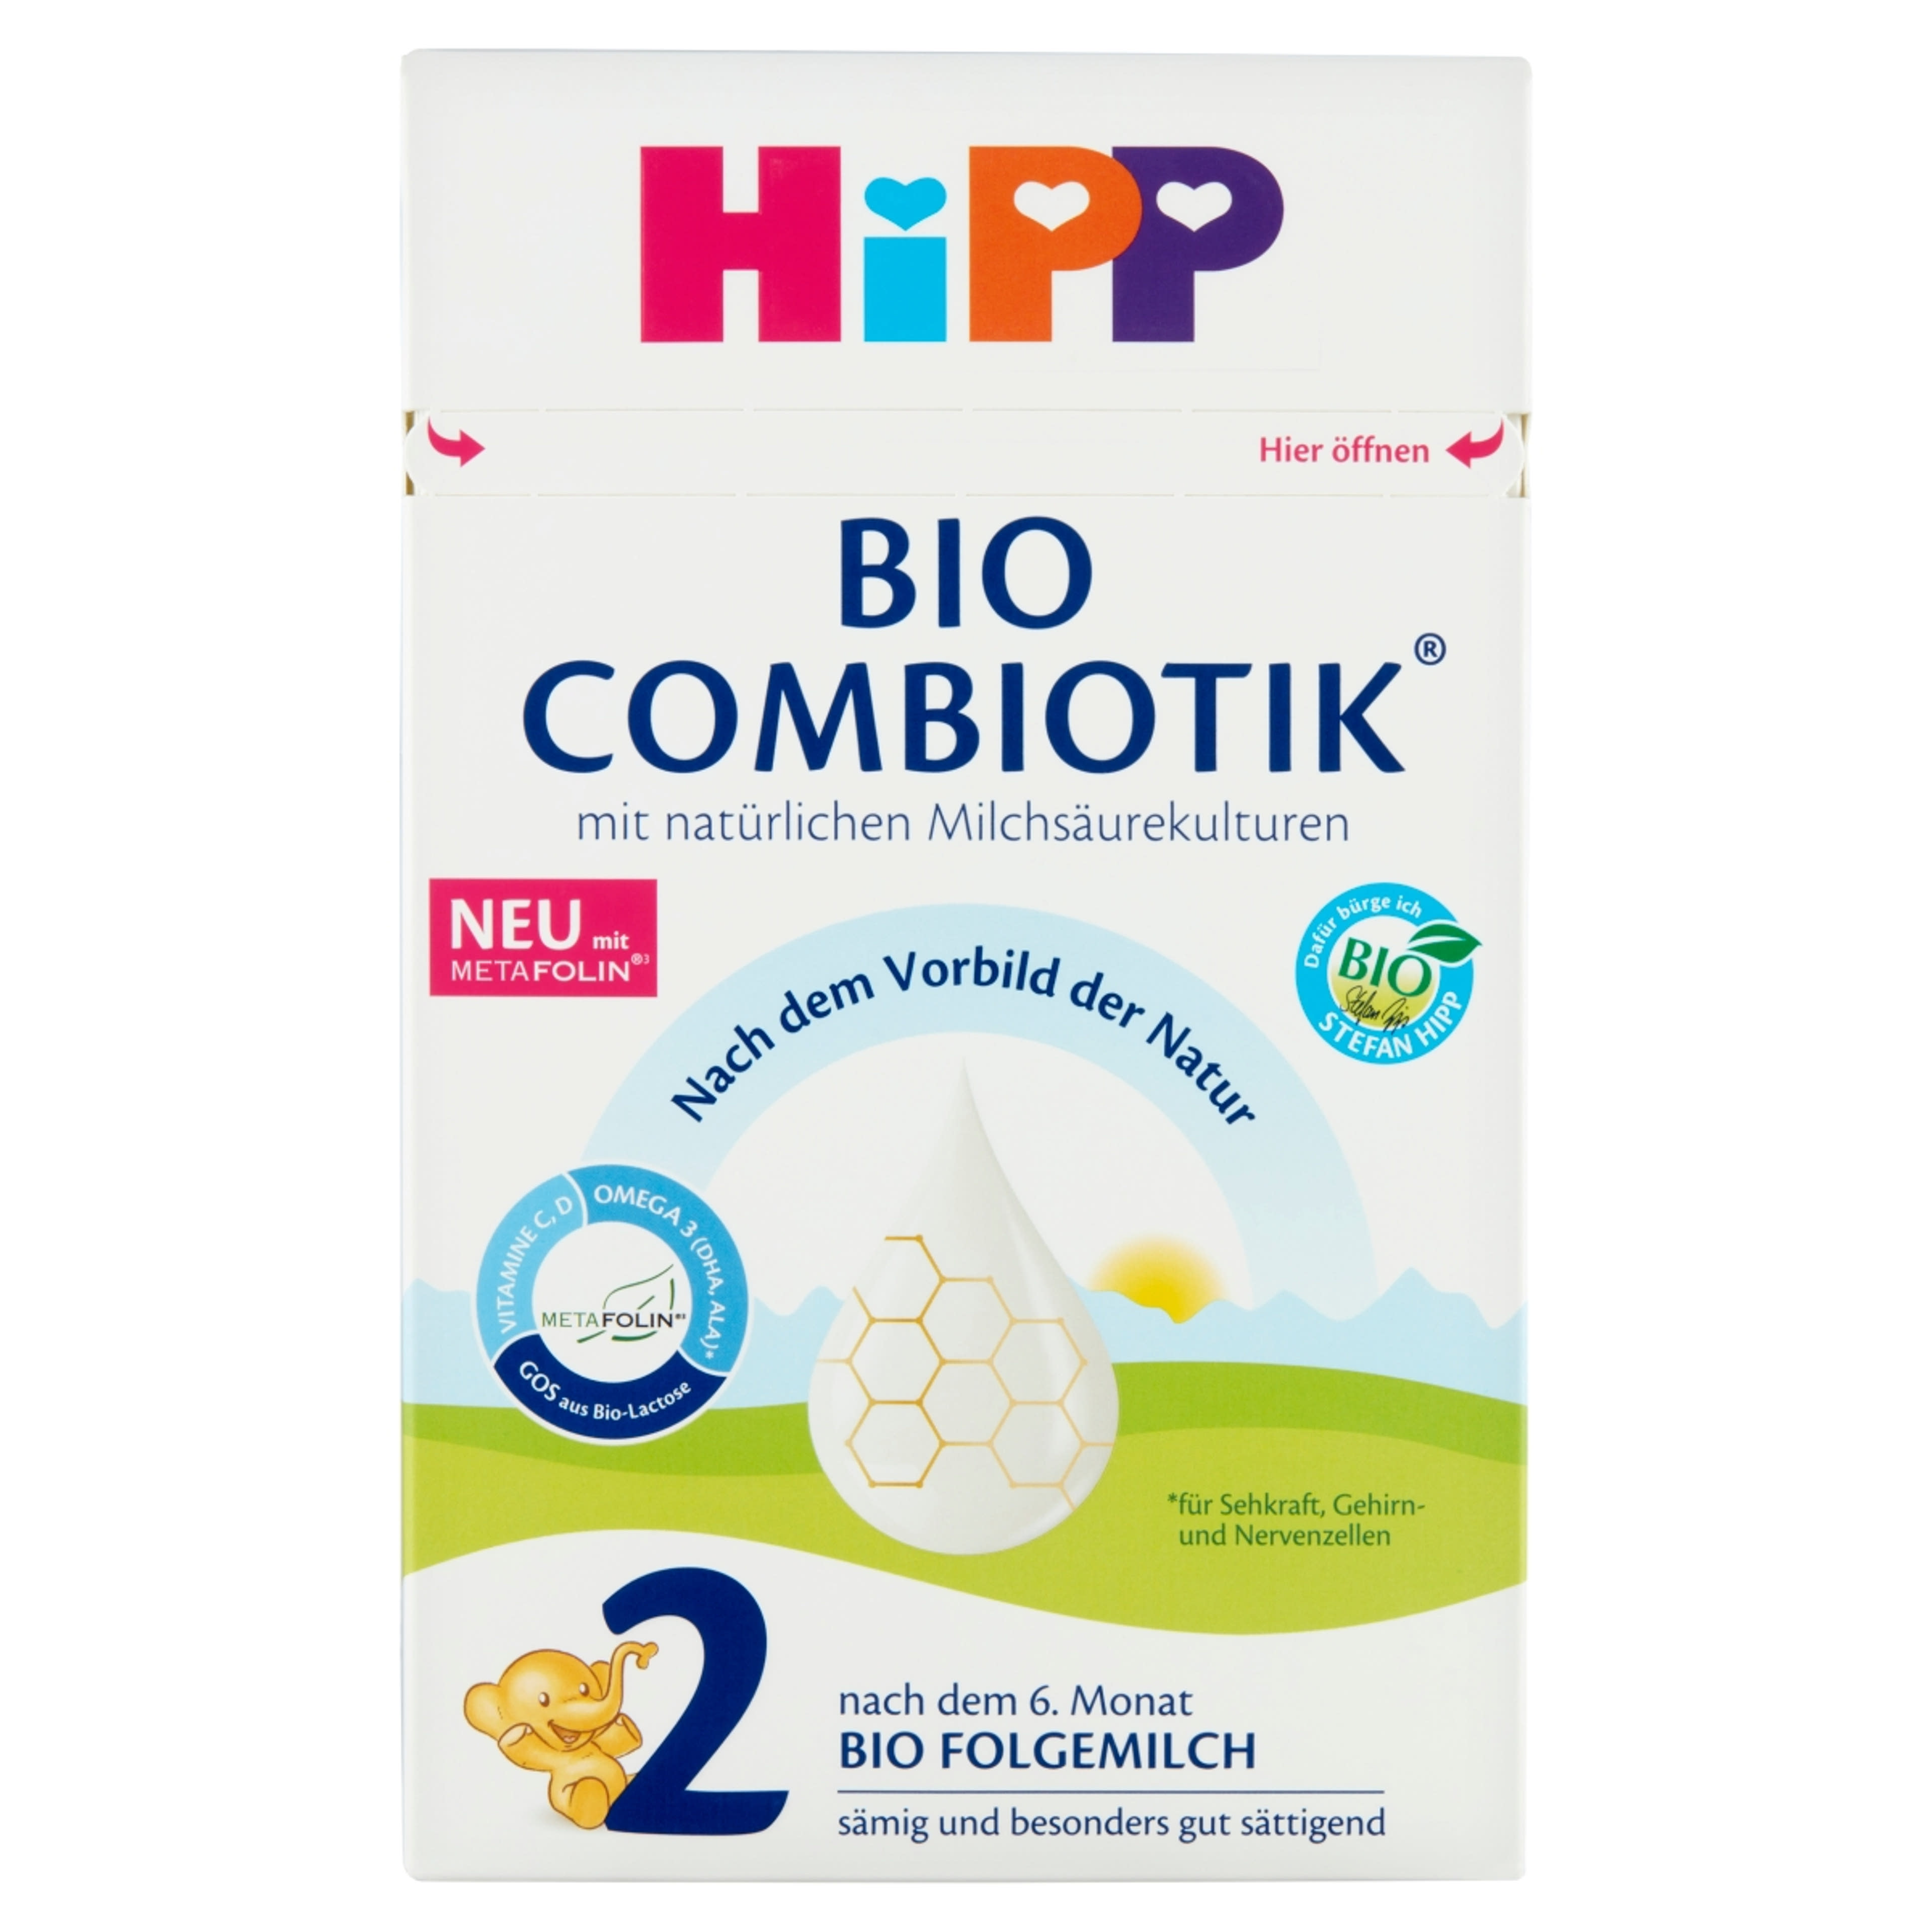 Hipp Bio Combiotik Tápszer 6 Hónapos Kortól - 600 g